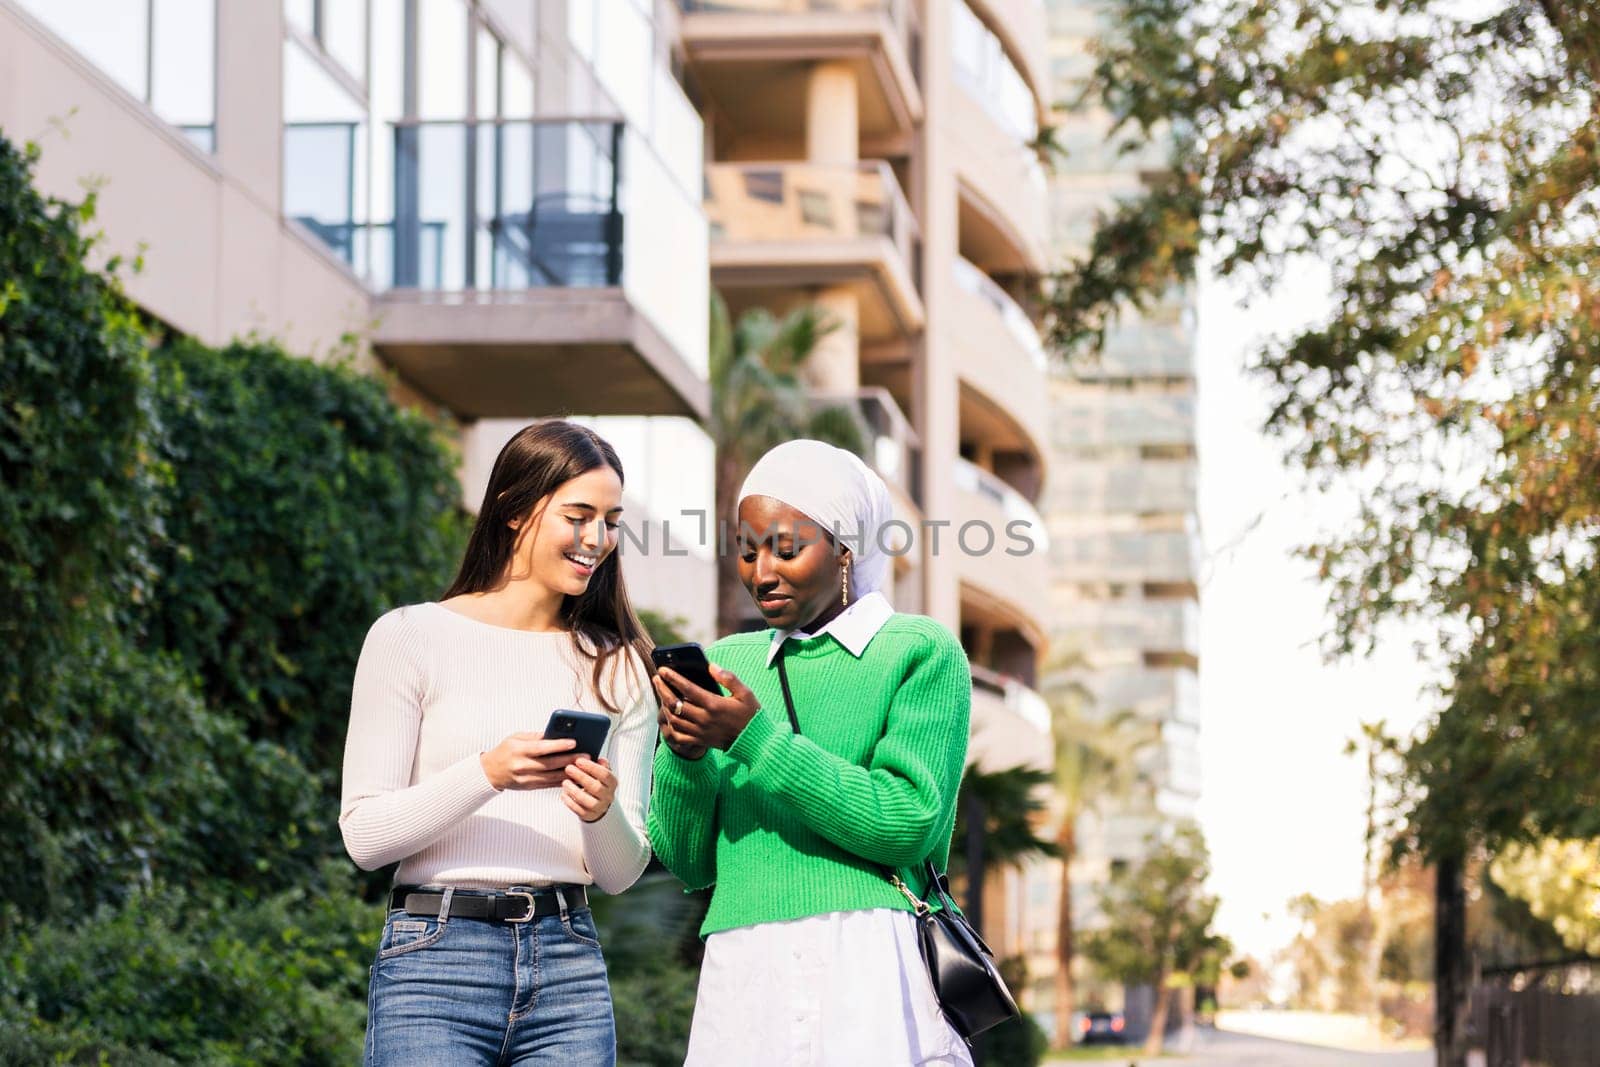 two women walking down a street looking phones by raulmelldo